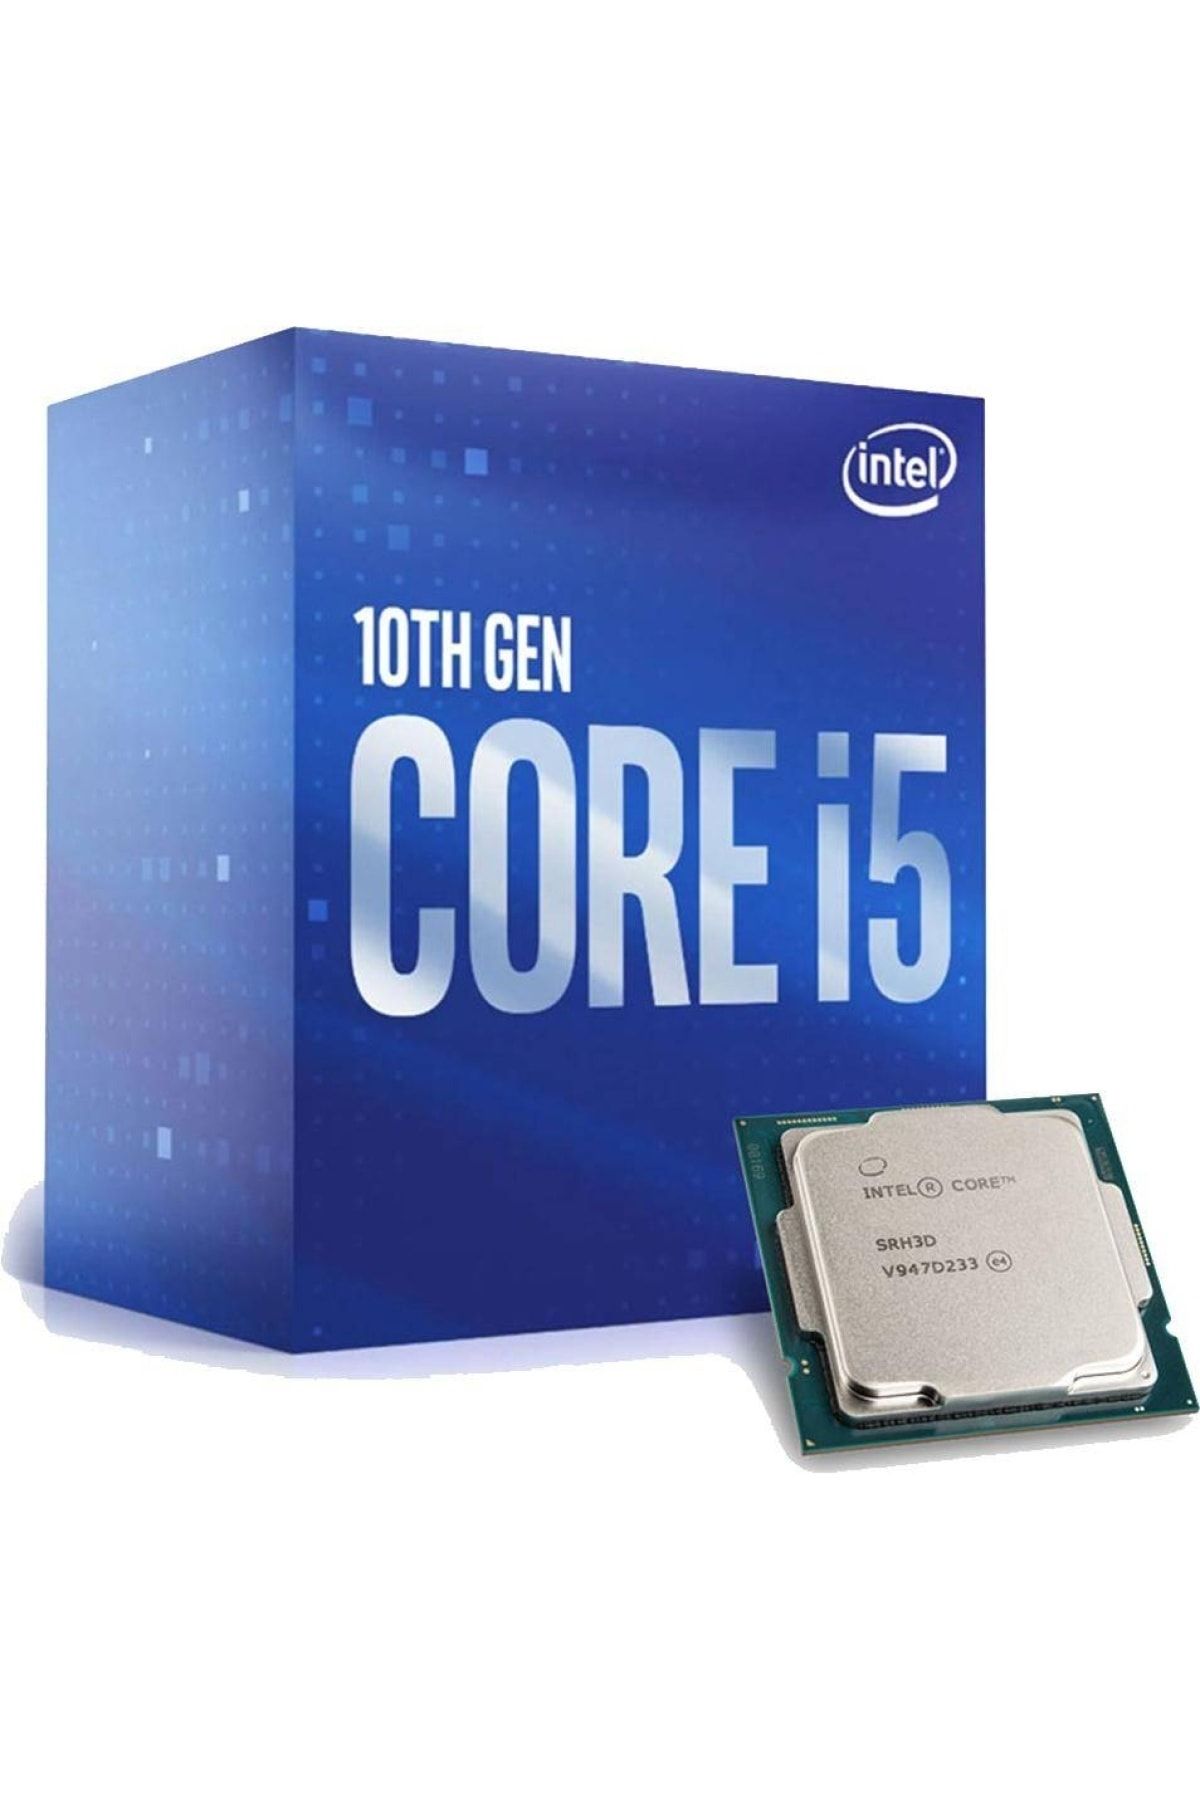 Intel i5 4400. Intel Core i5-10600kf. Процессор Intel Core i5-10400f Box. Процессор Intel Core i5-10400f OEM. Процессор i5 12400f.